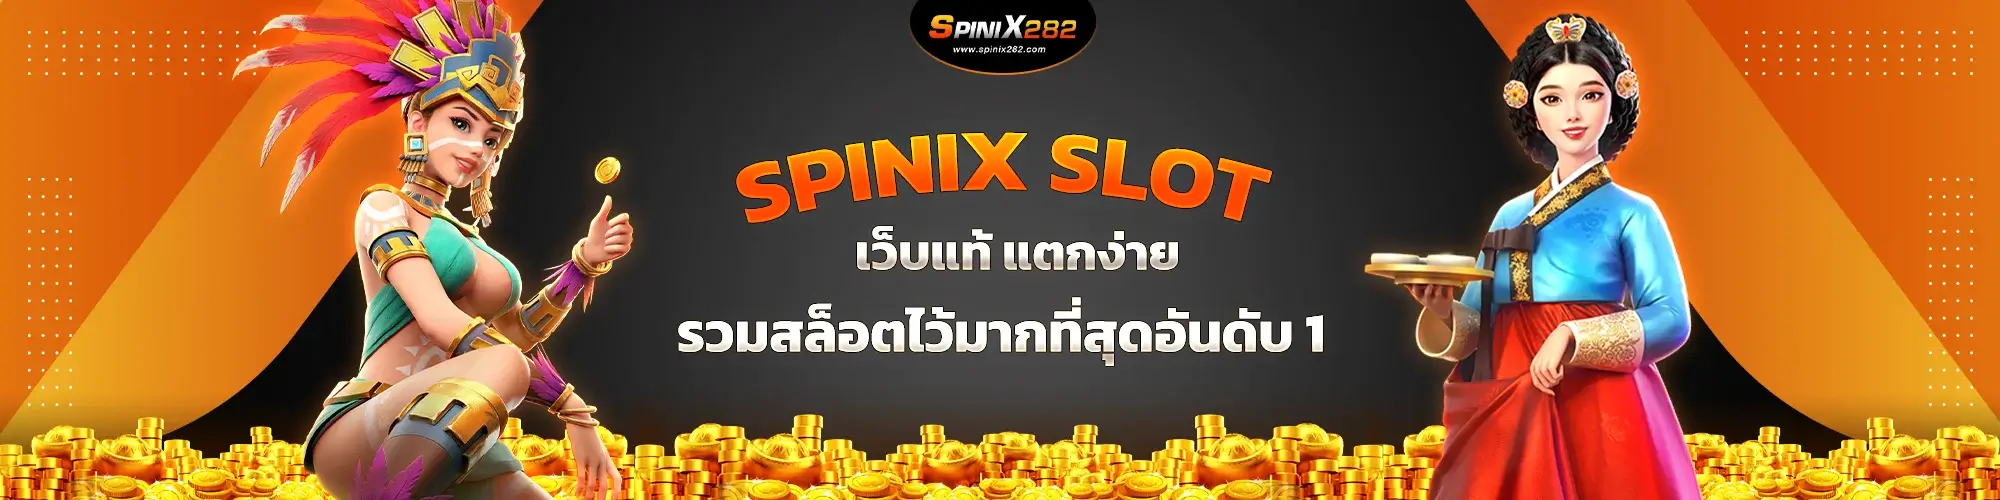 spinix slot เว็บแท้แตกง่ายอันดับ 1